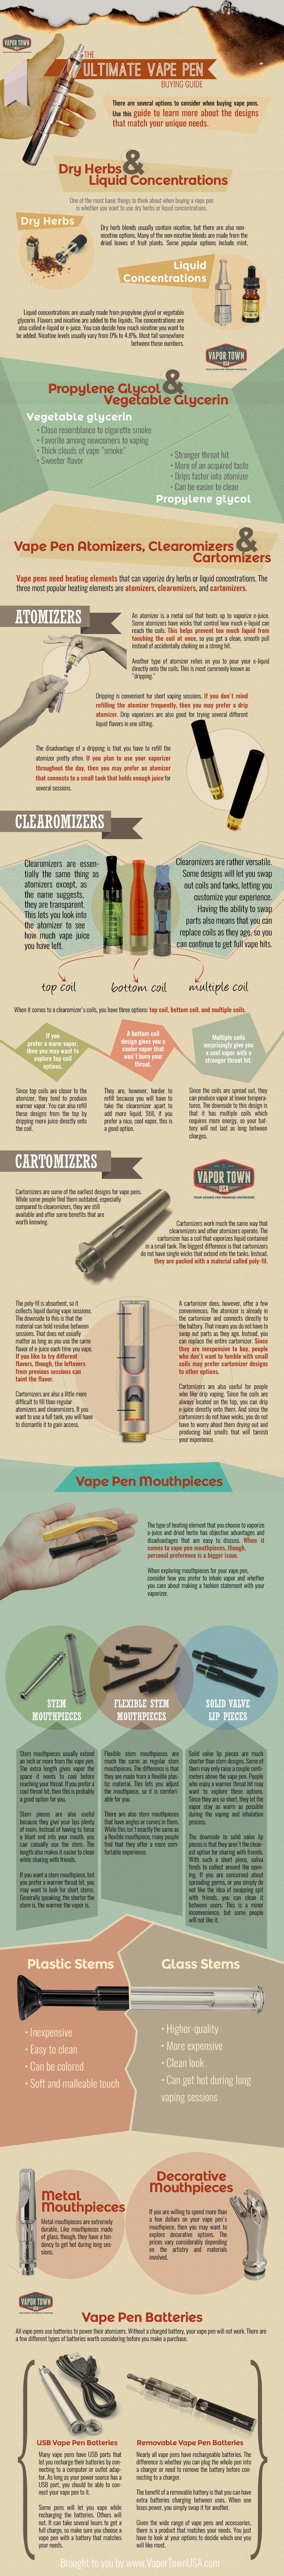 The Ultimate Vape Pen Buying Guide From VaporTownUSA.com